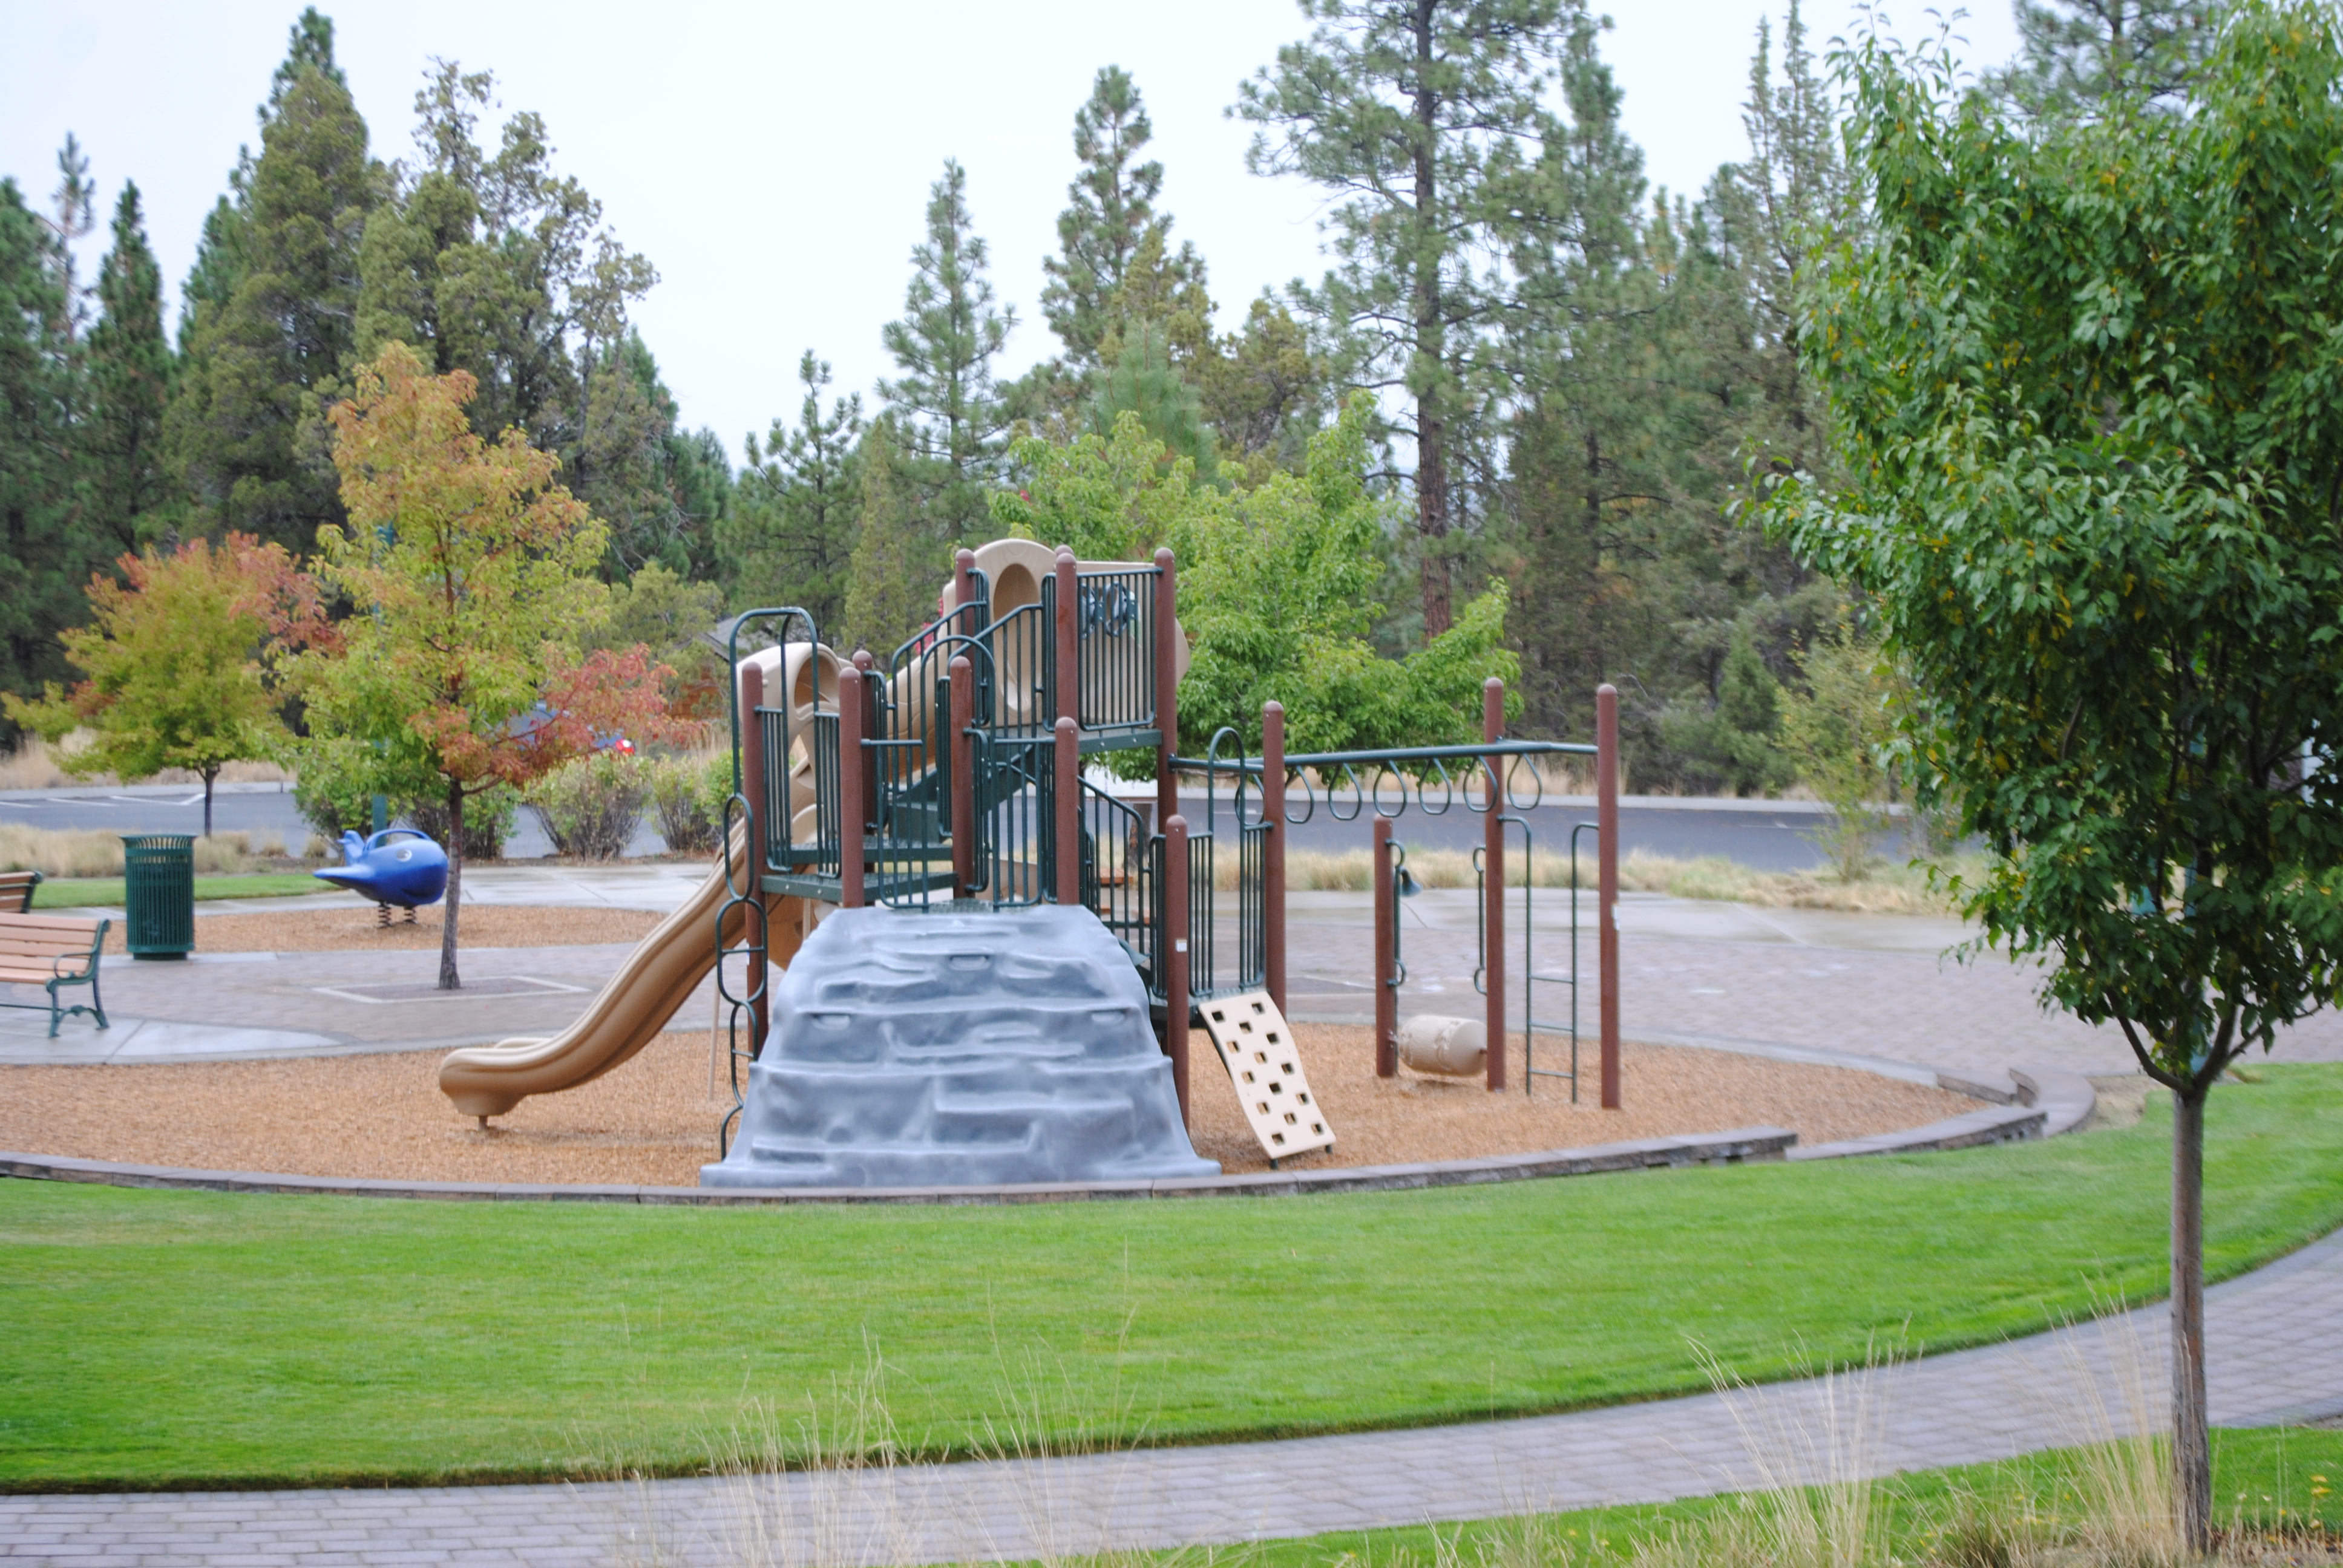 The playground at Quail Park